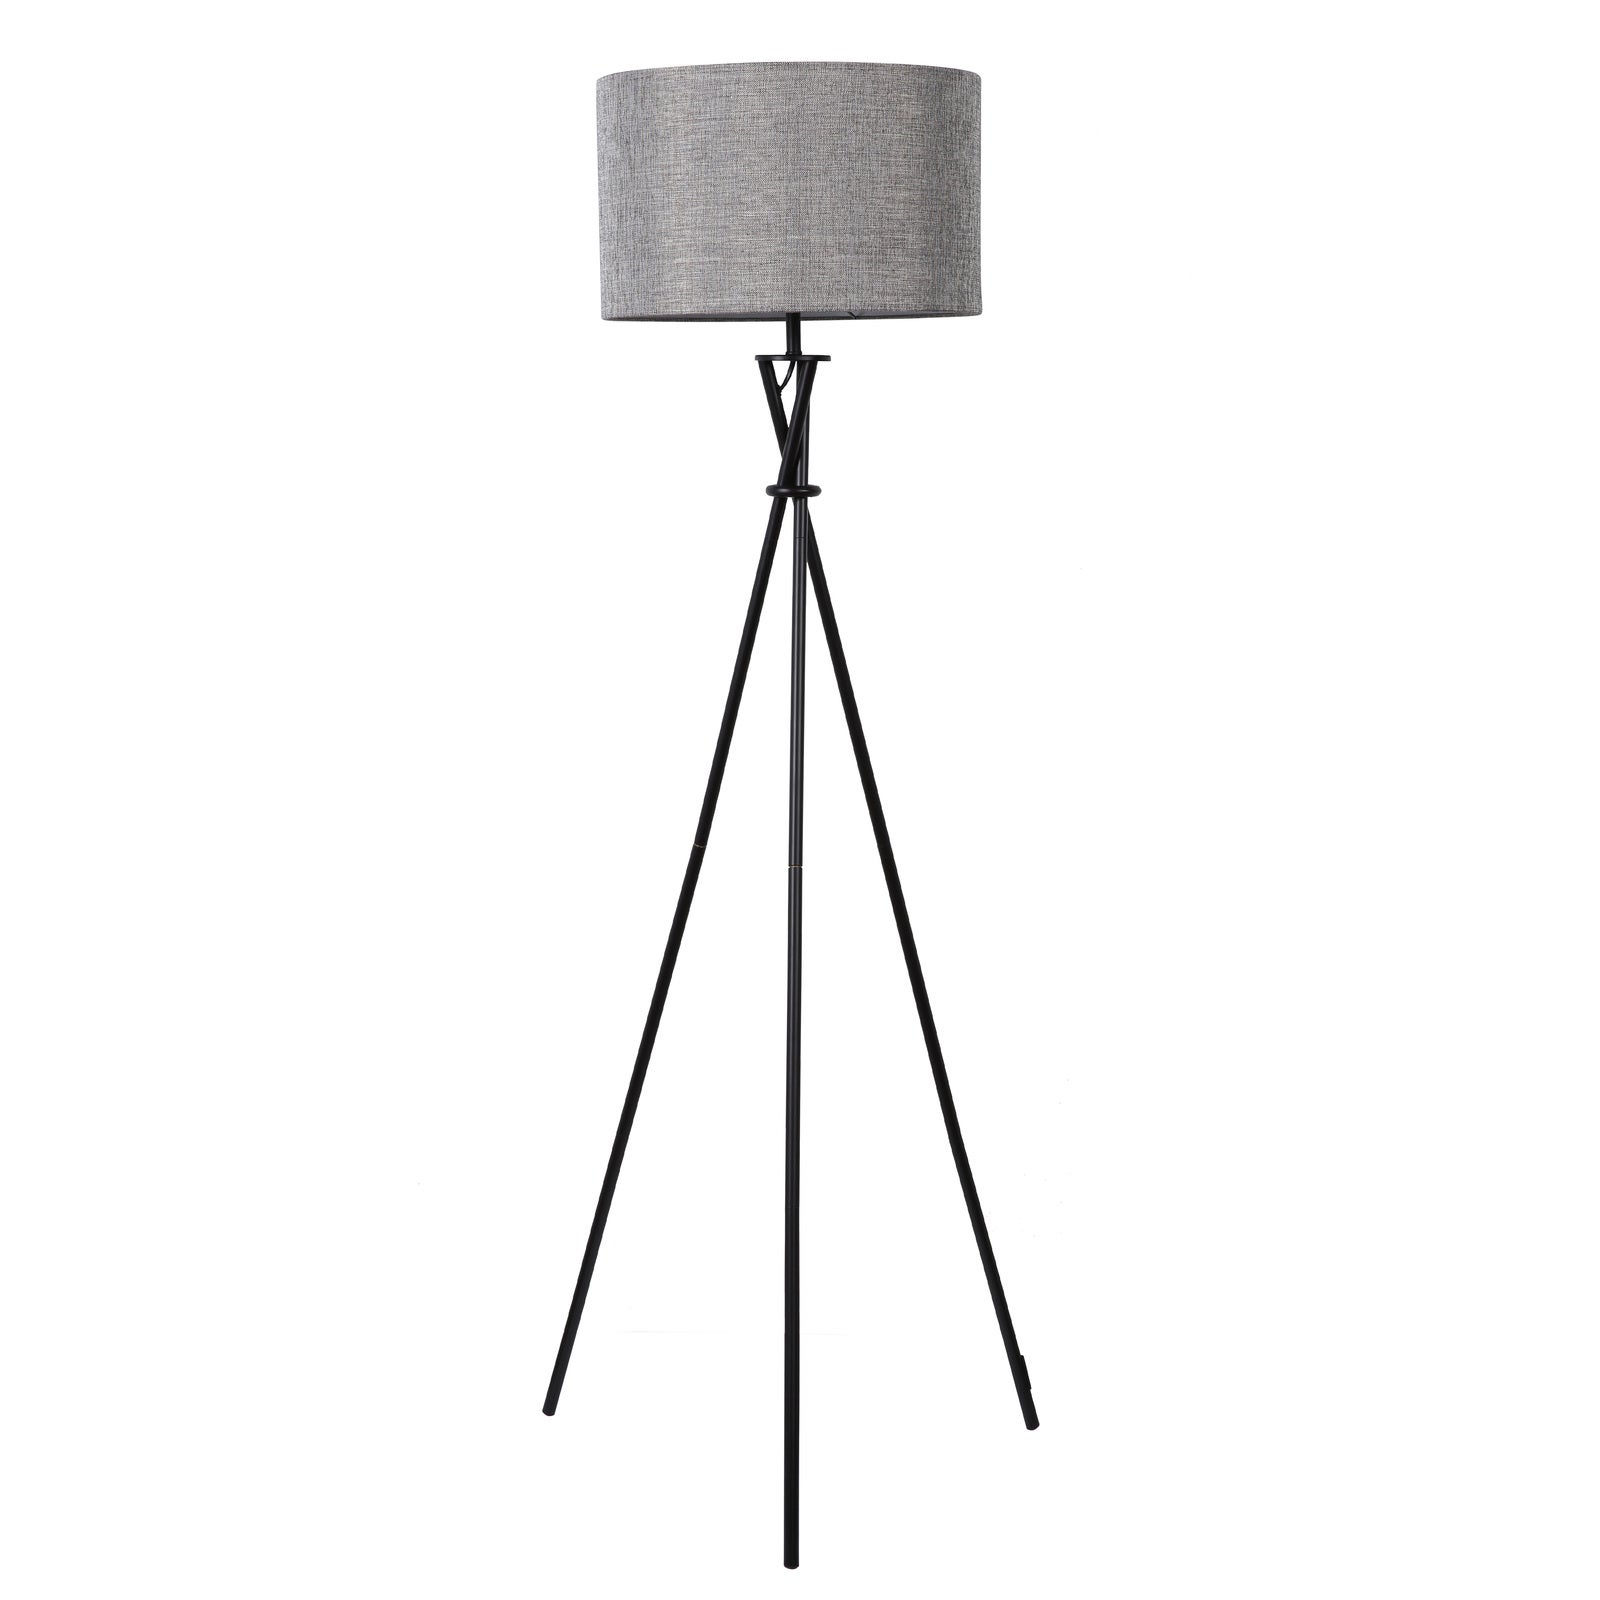 Sherwood Lighting Tripod Floor Lamp - Grey